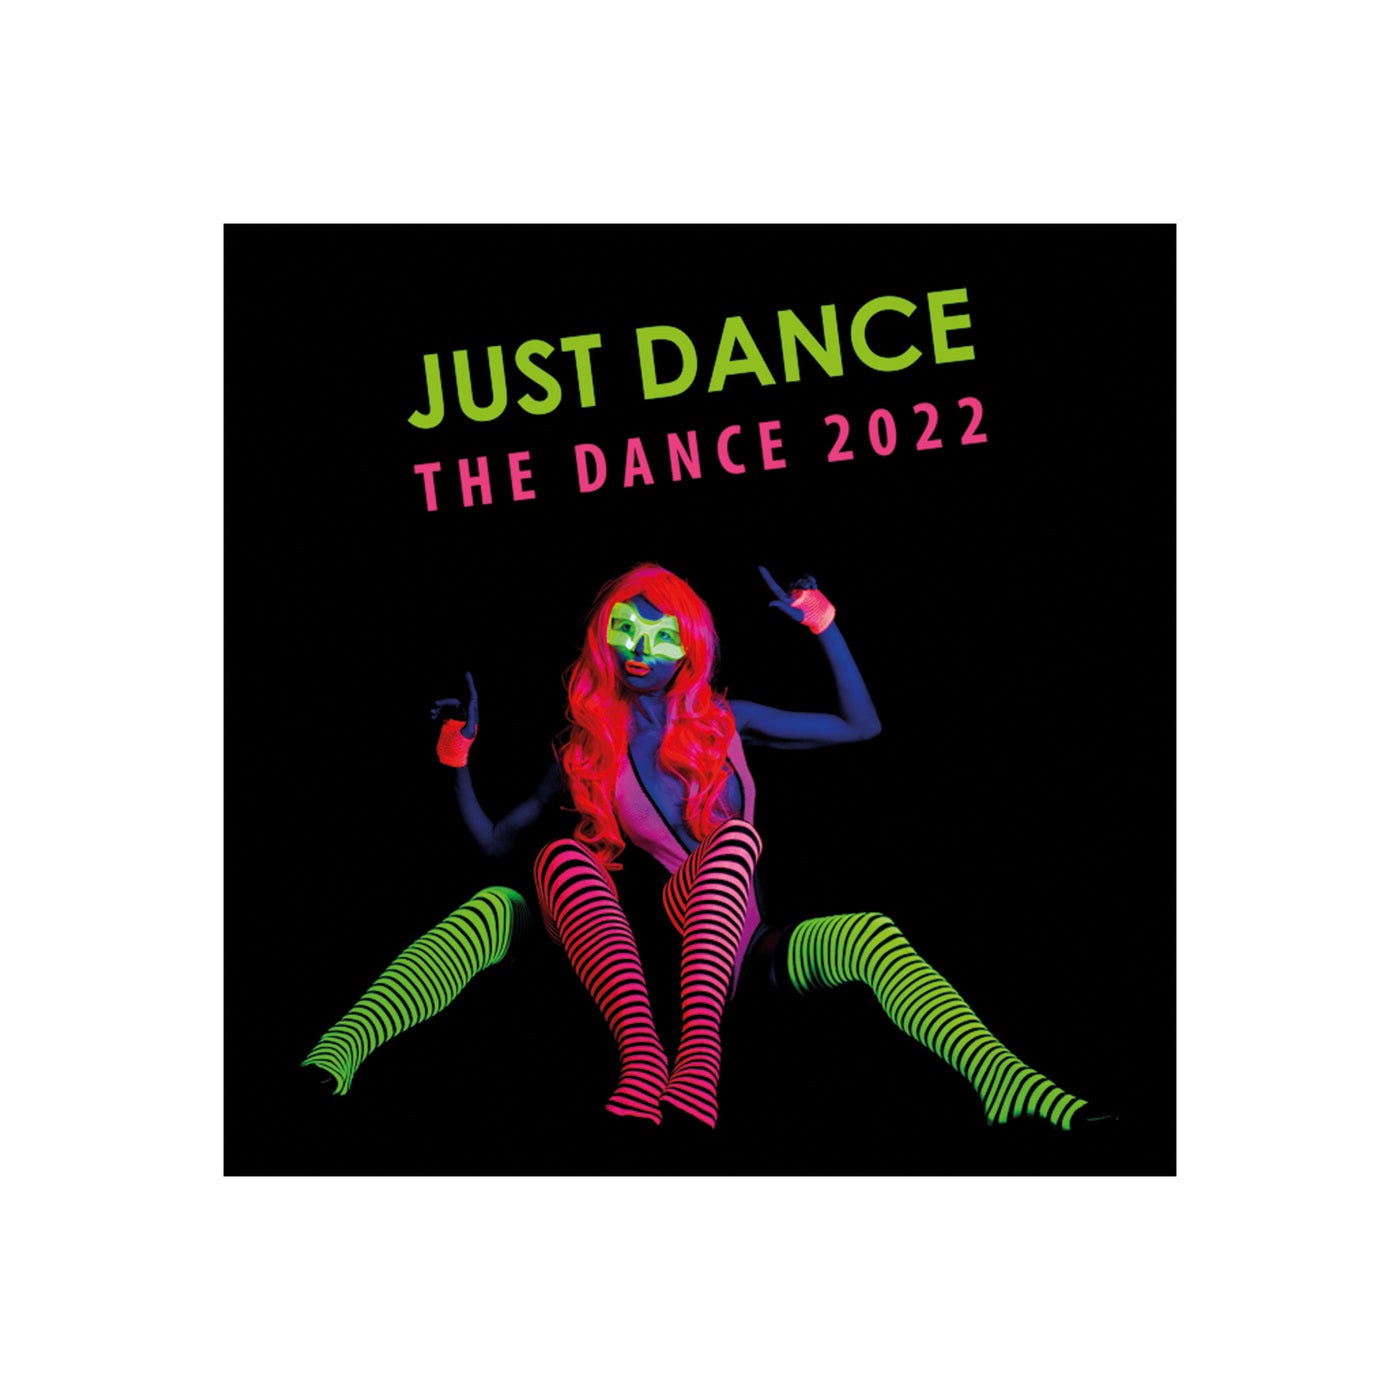 Just Dance, the Dance 2022